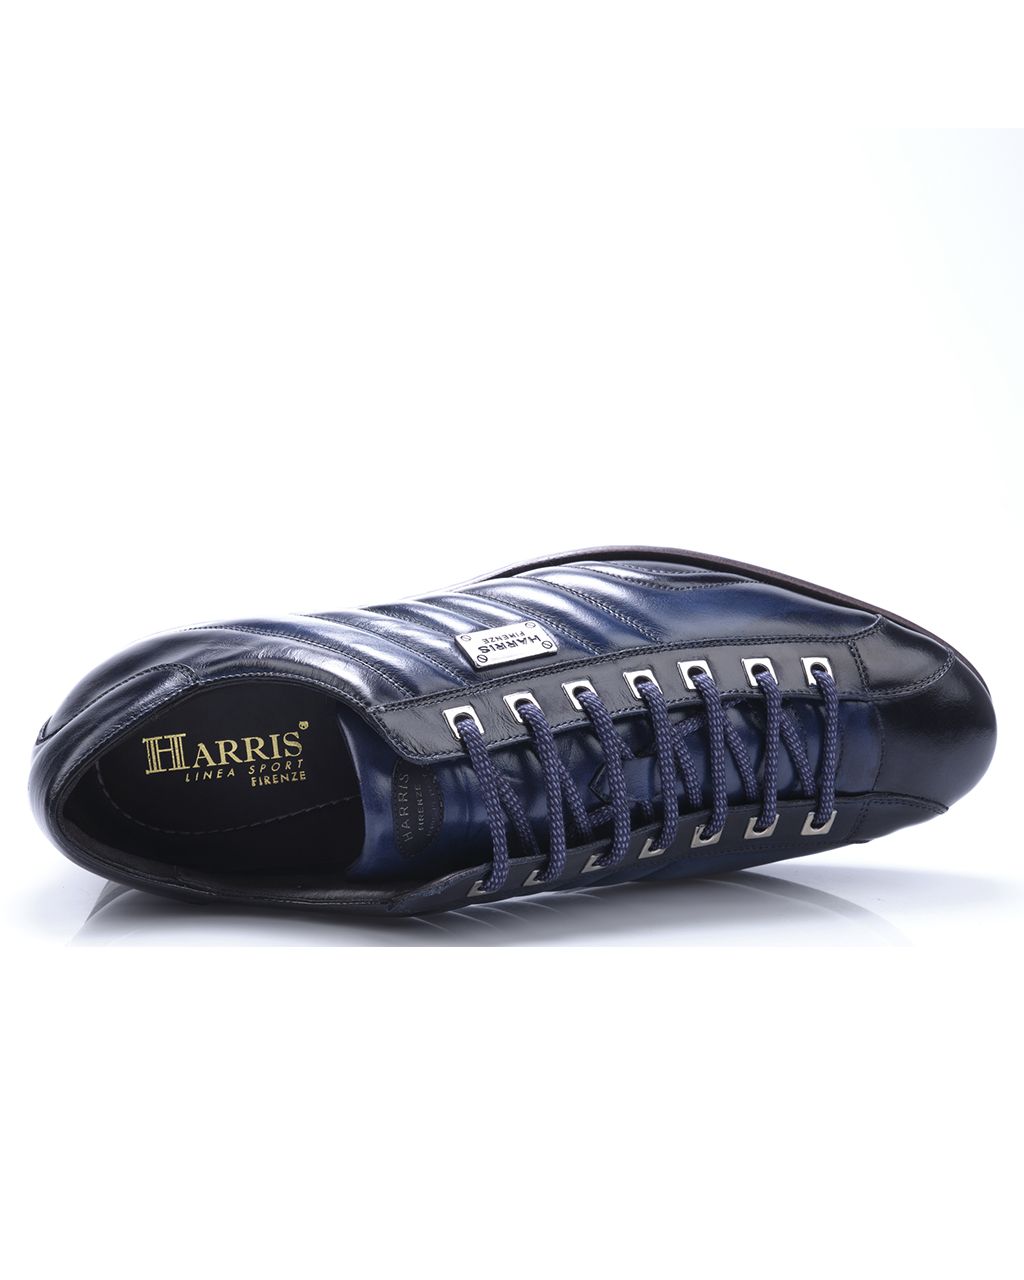 Harris Sneakers Donker blauw 081881-001-10